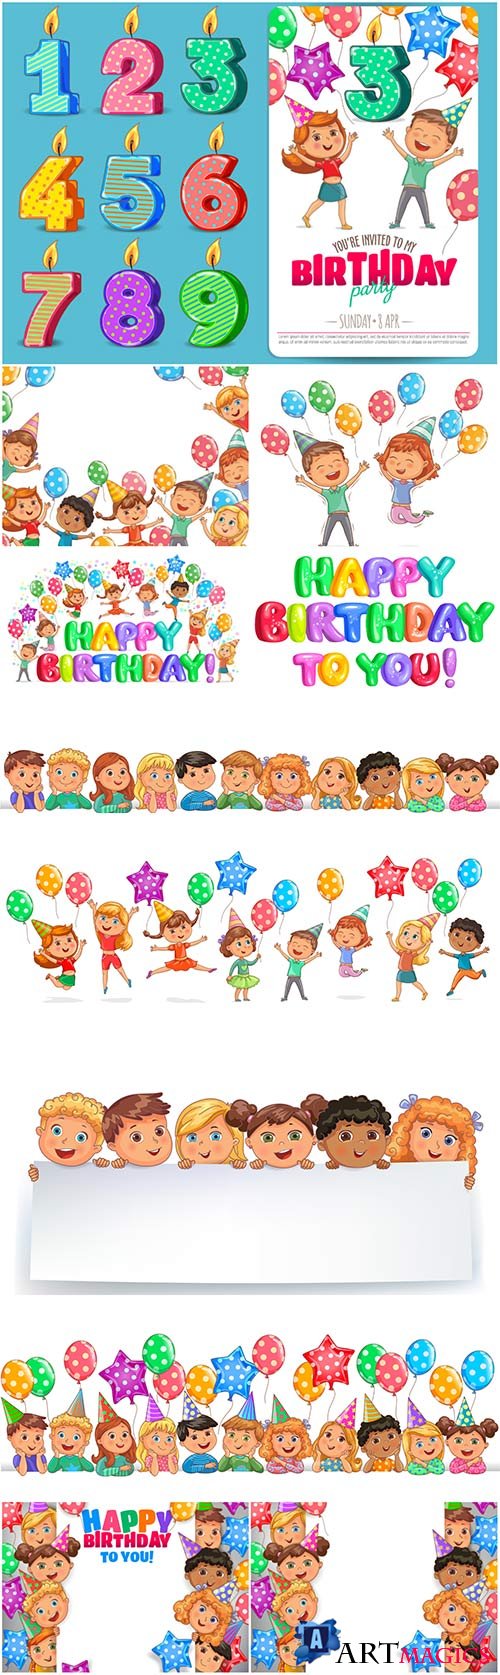 Children's birthday in cartoon style in vector